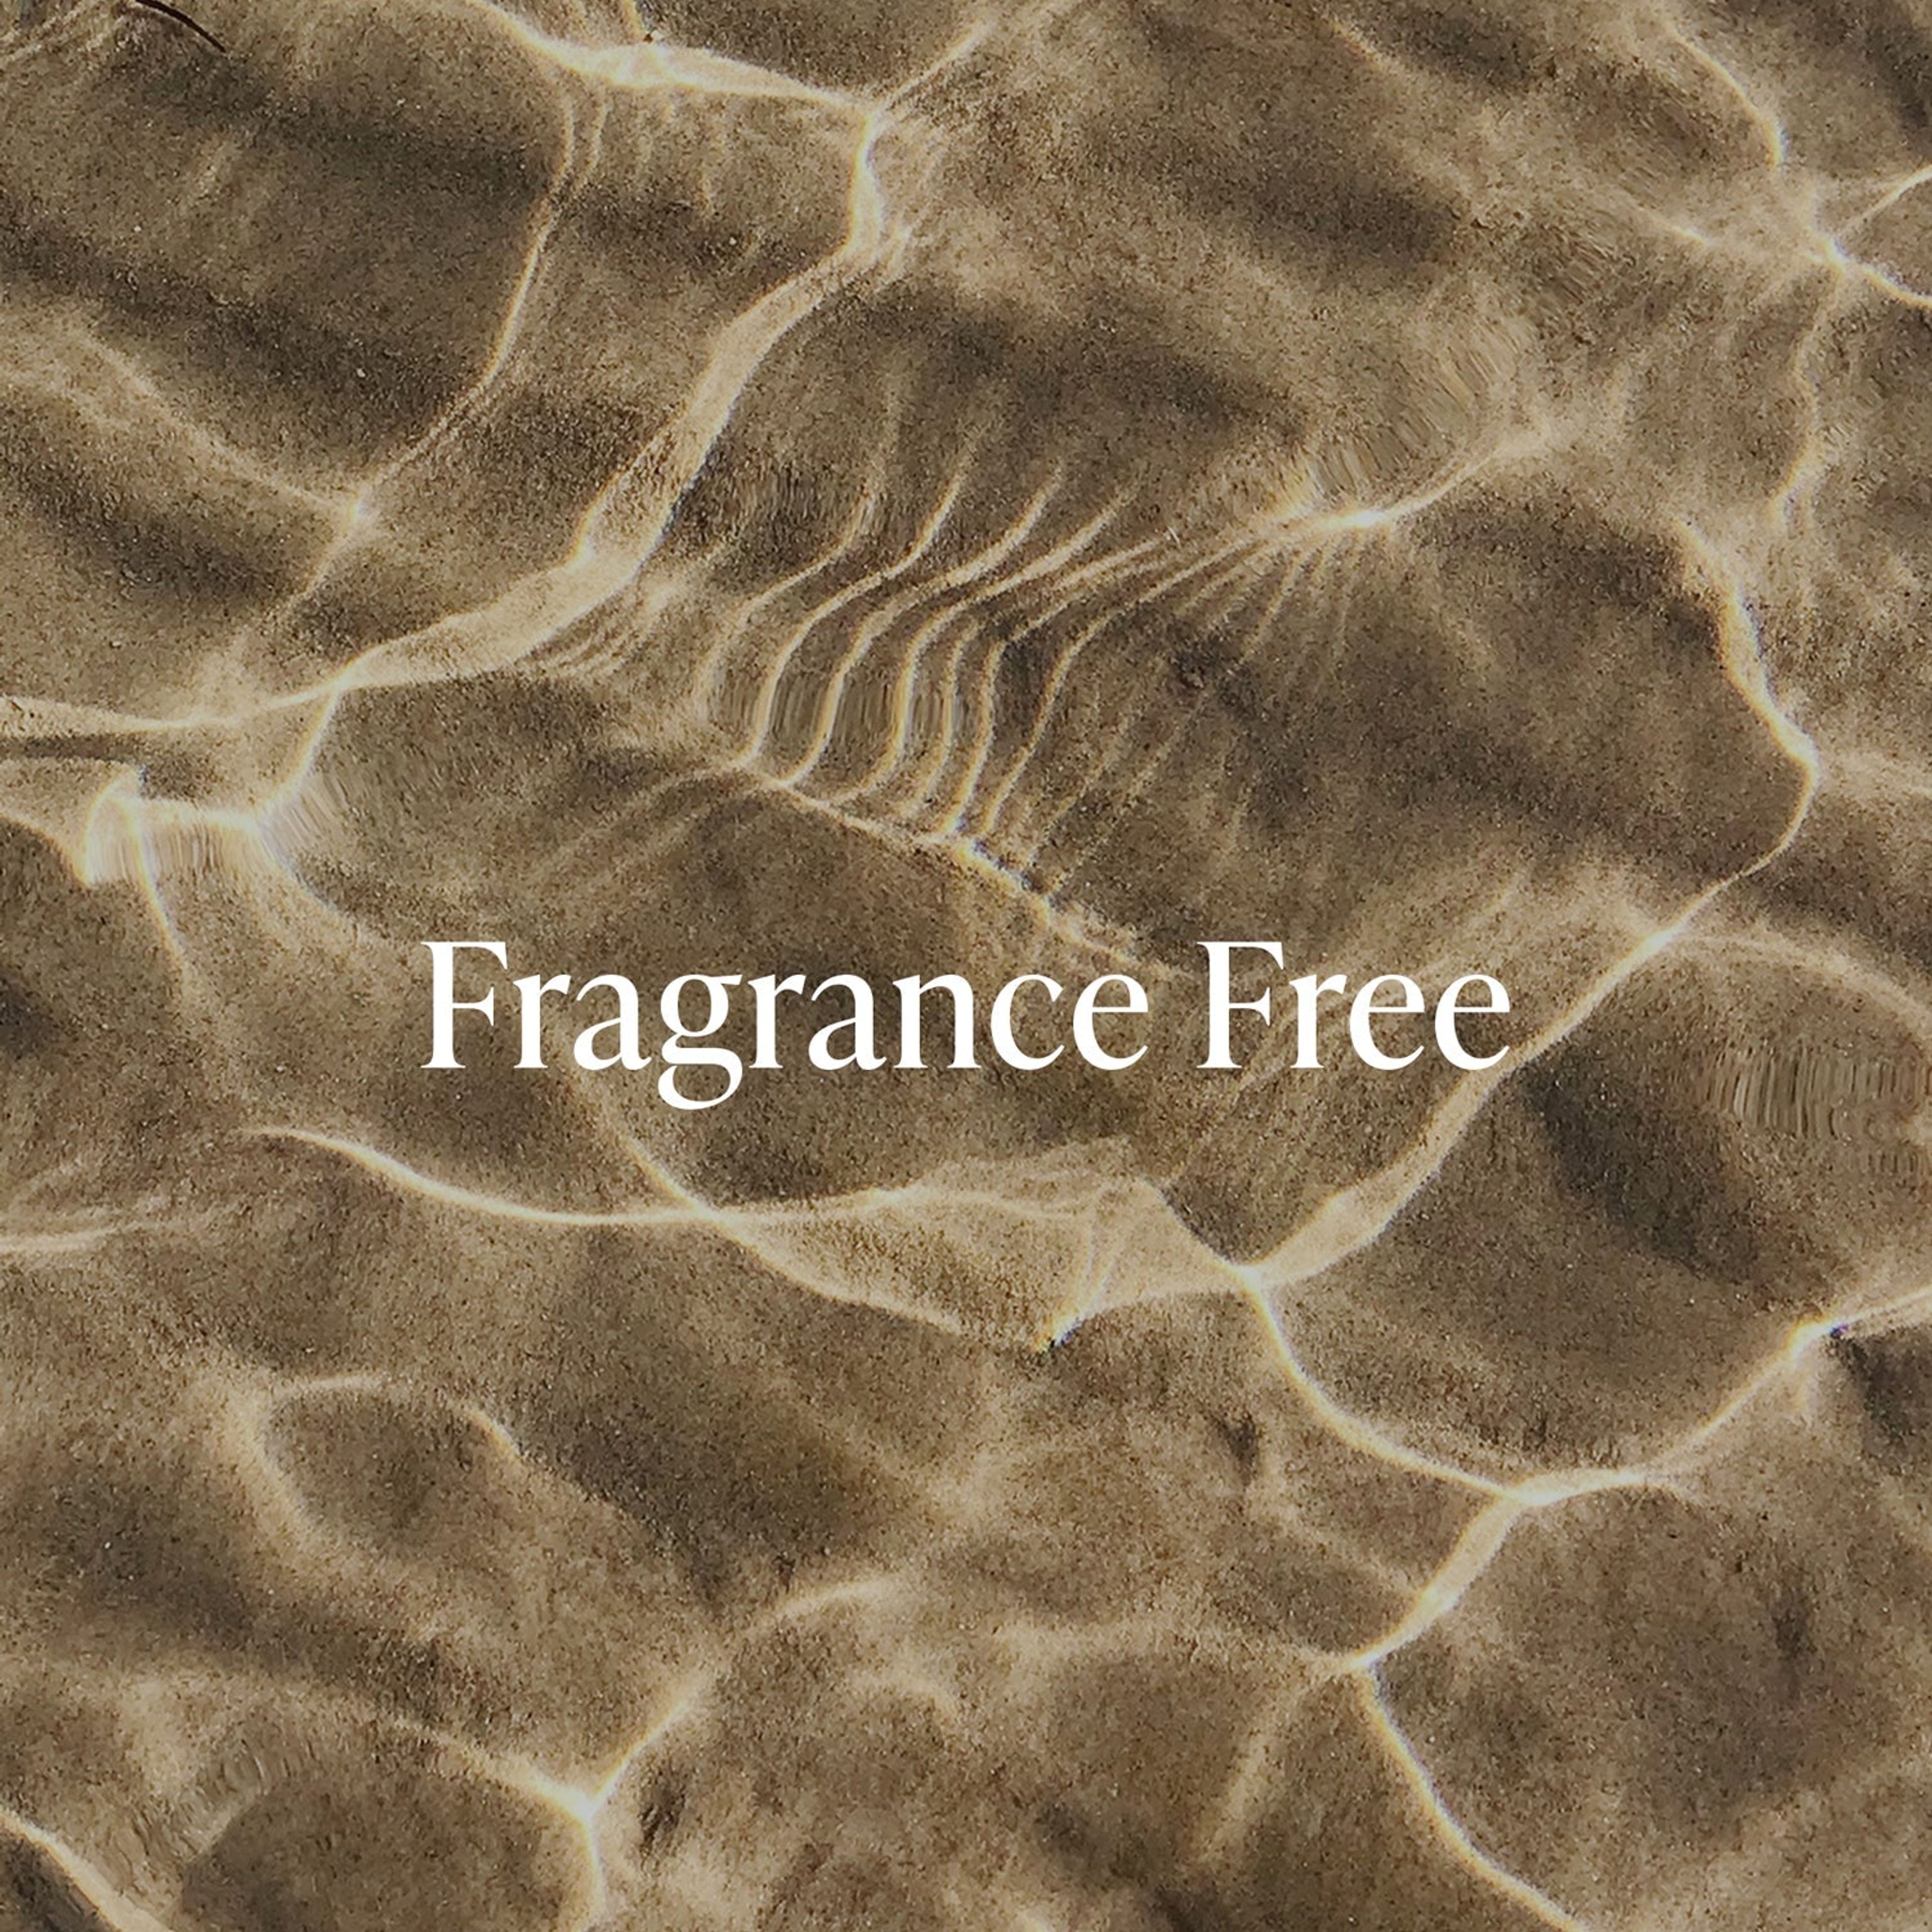 Fragrance Free - Travel Size Body Wash